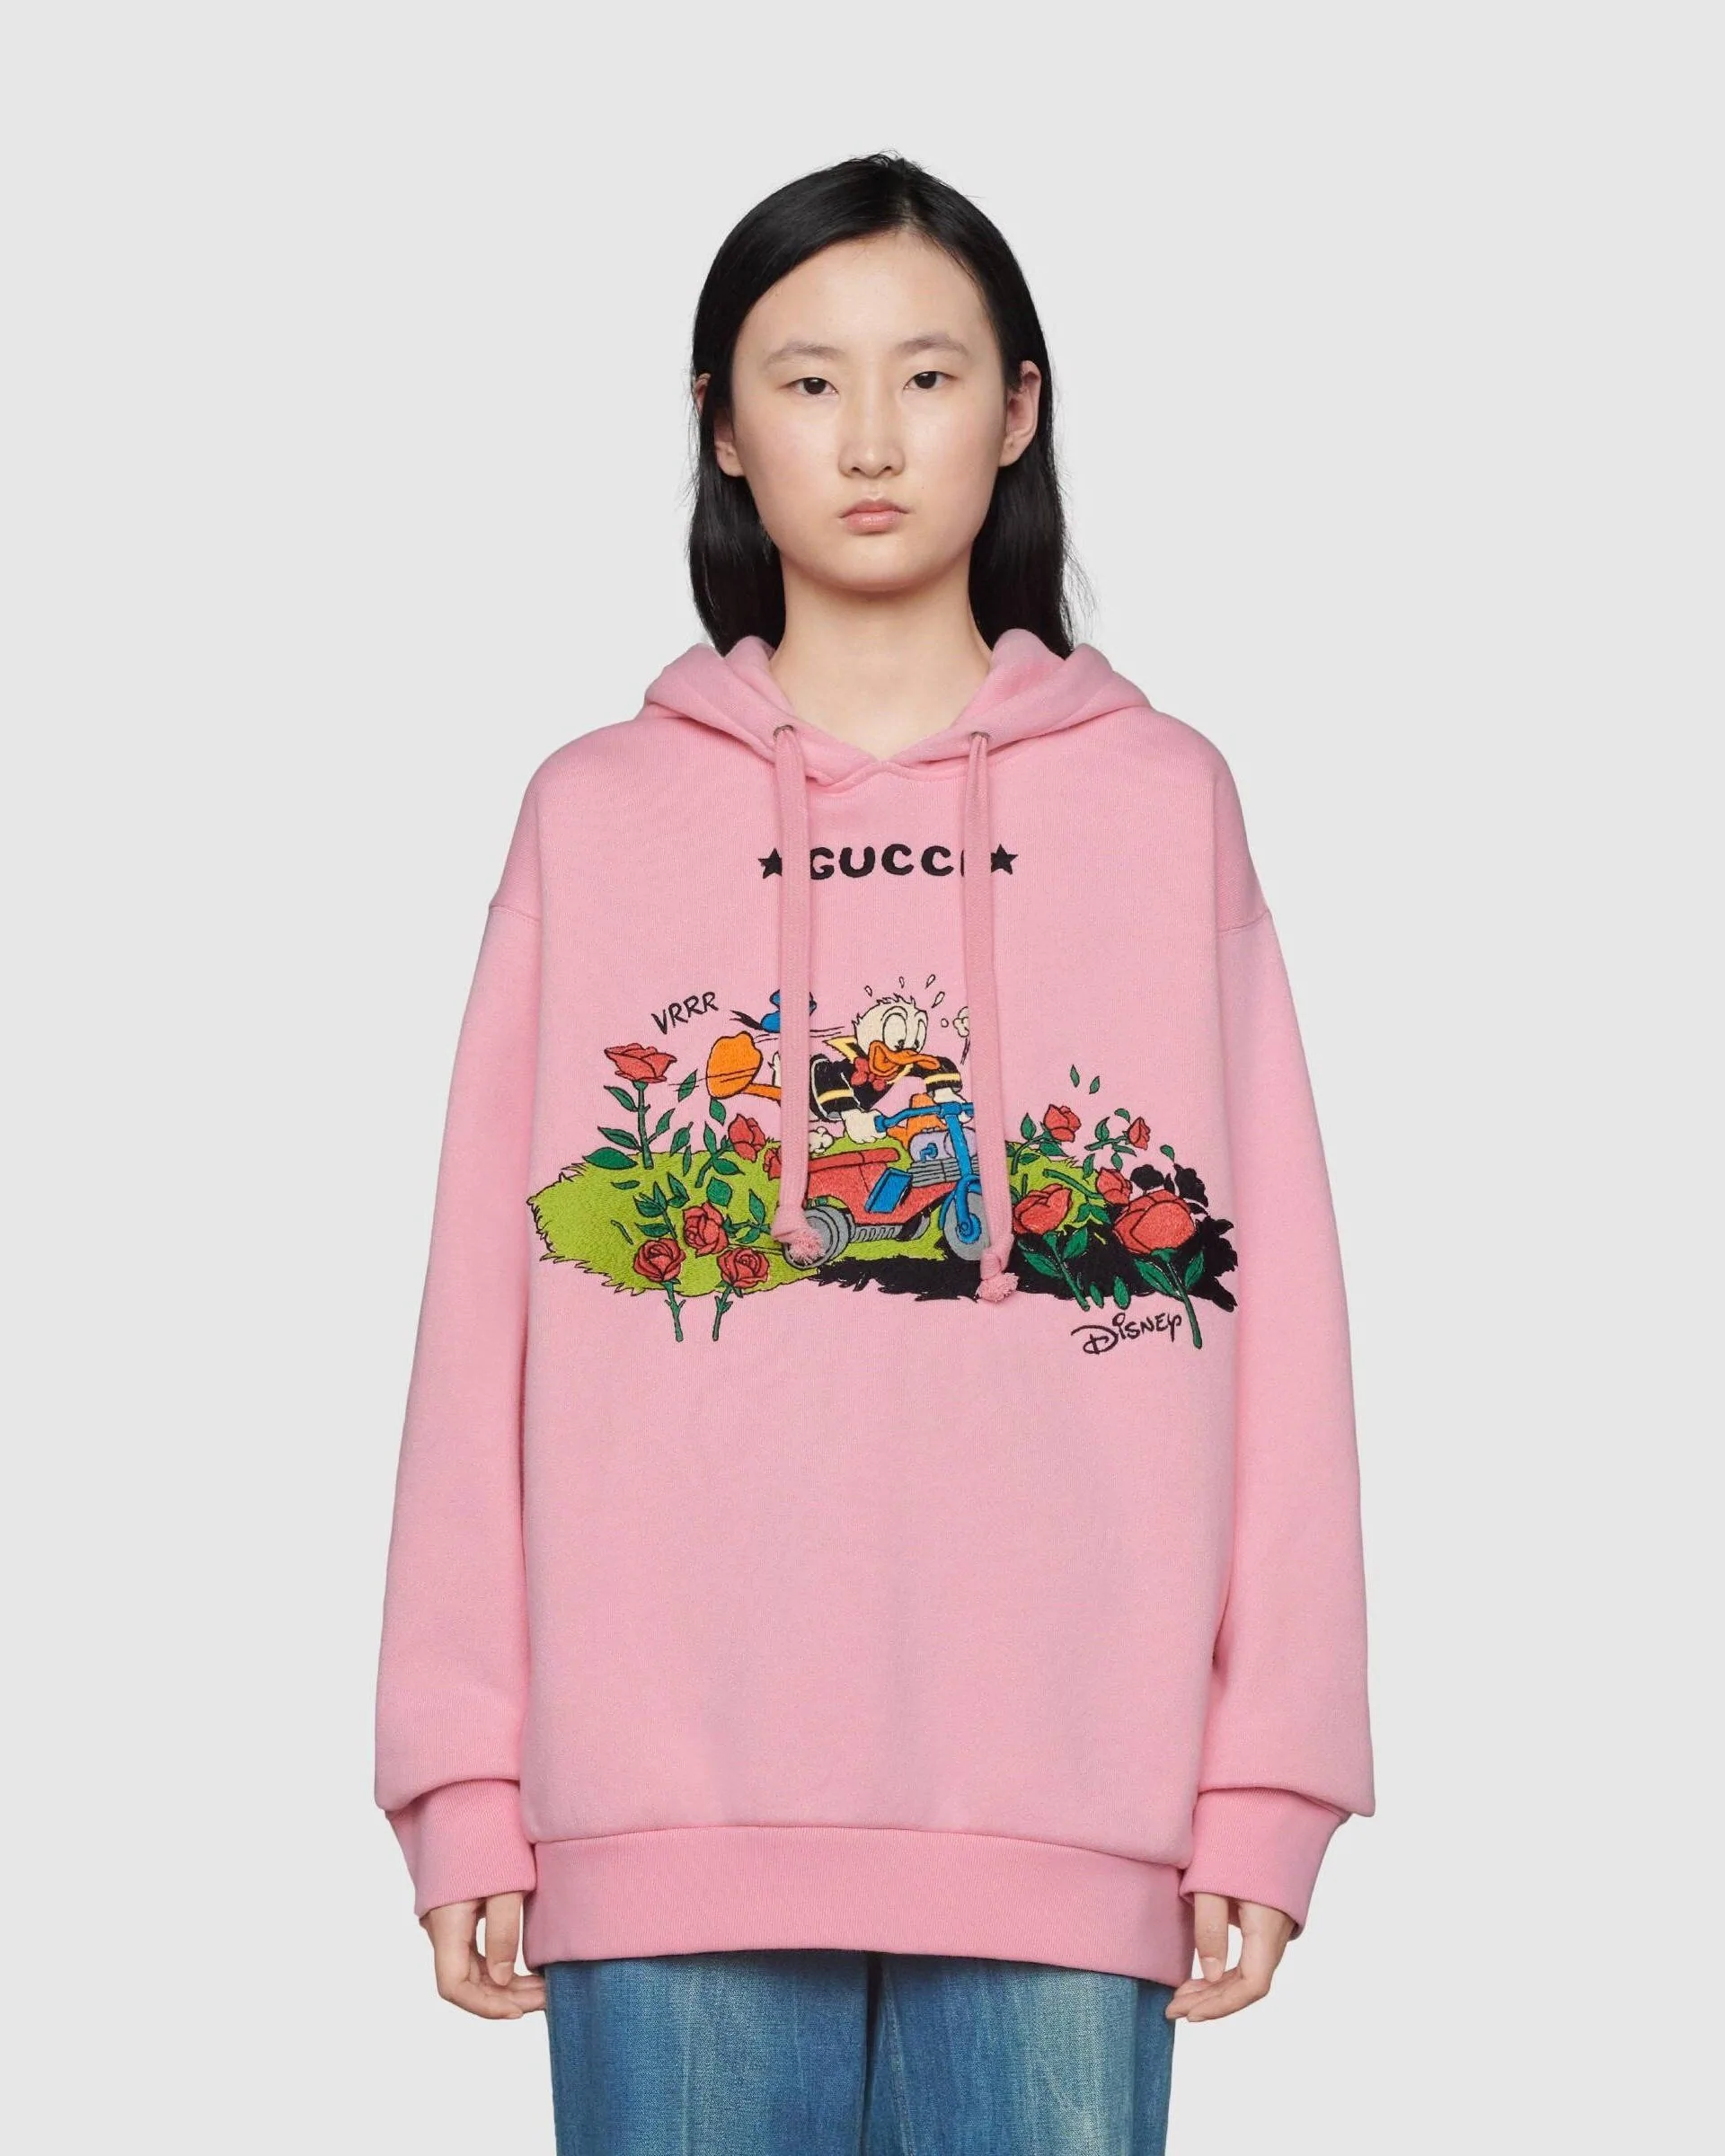 Gucci X Disney Donald Duck Cotton Sweatshirt